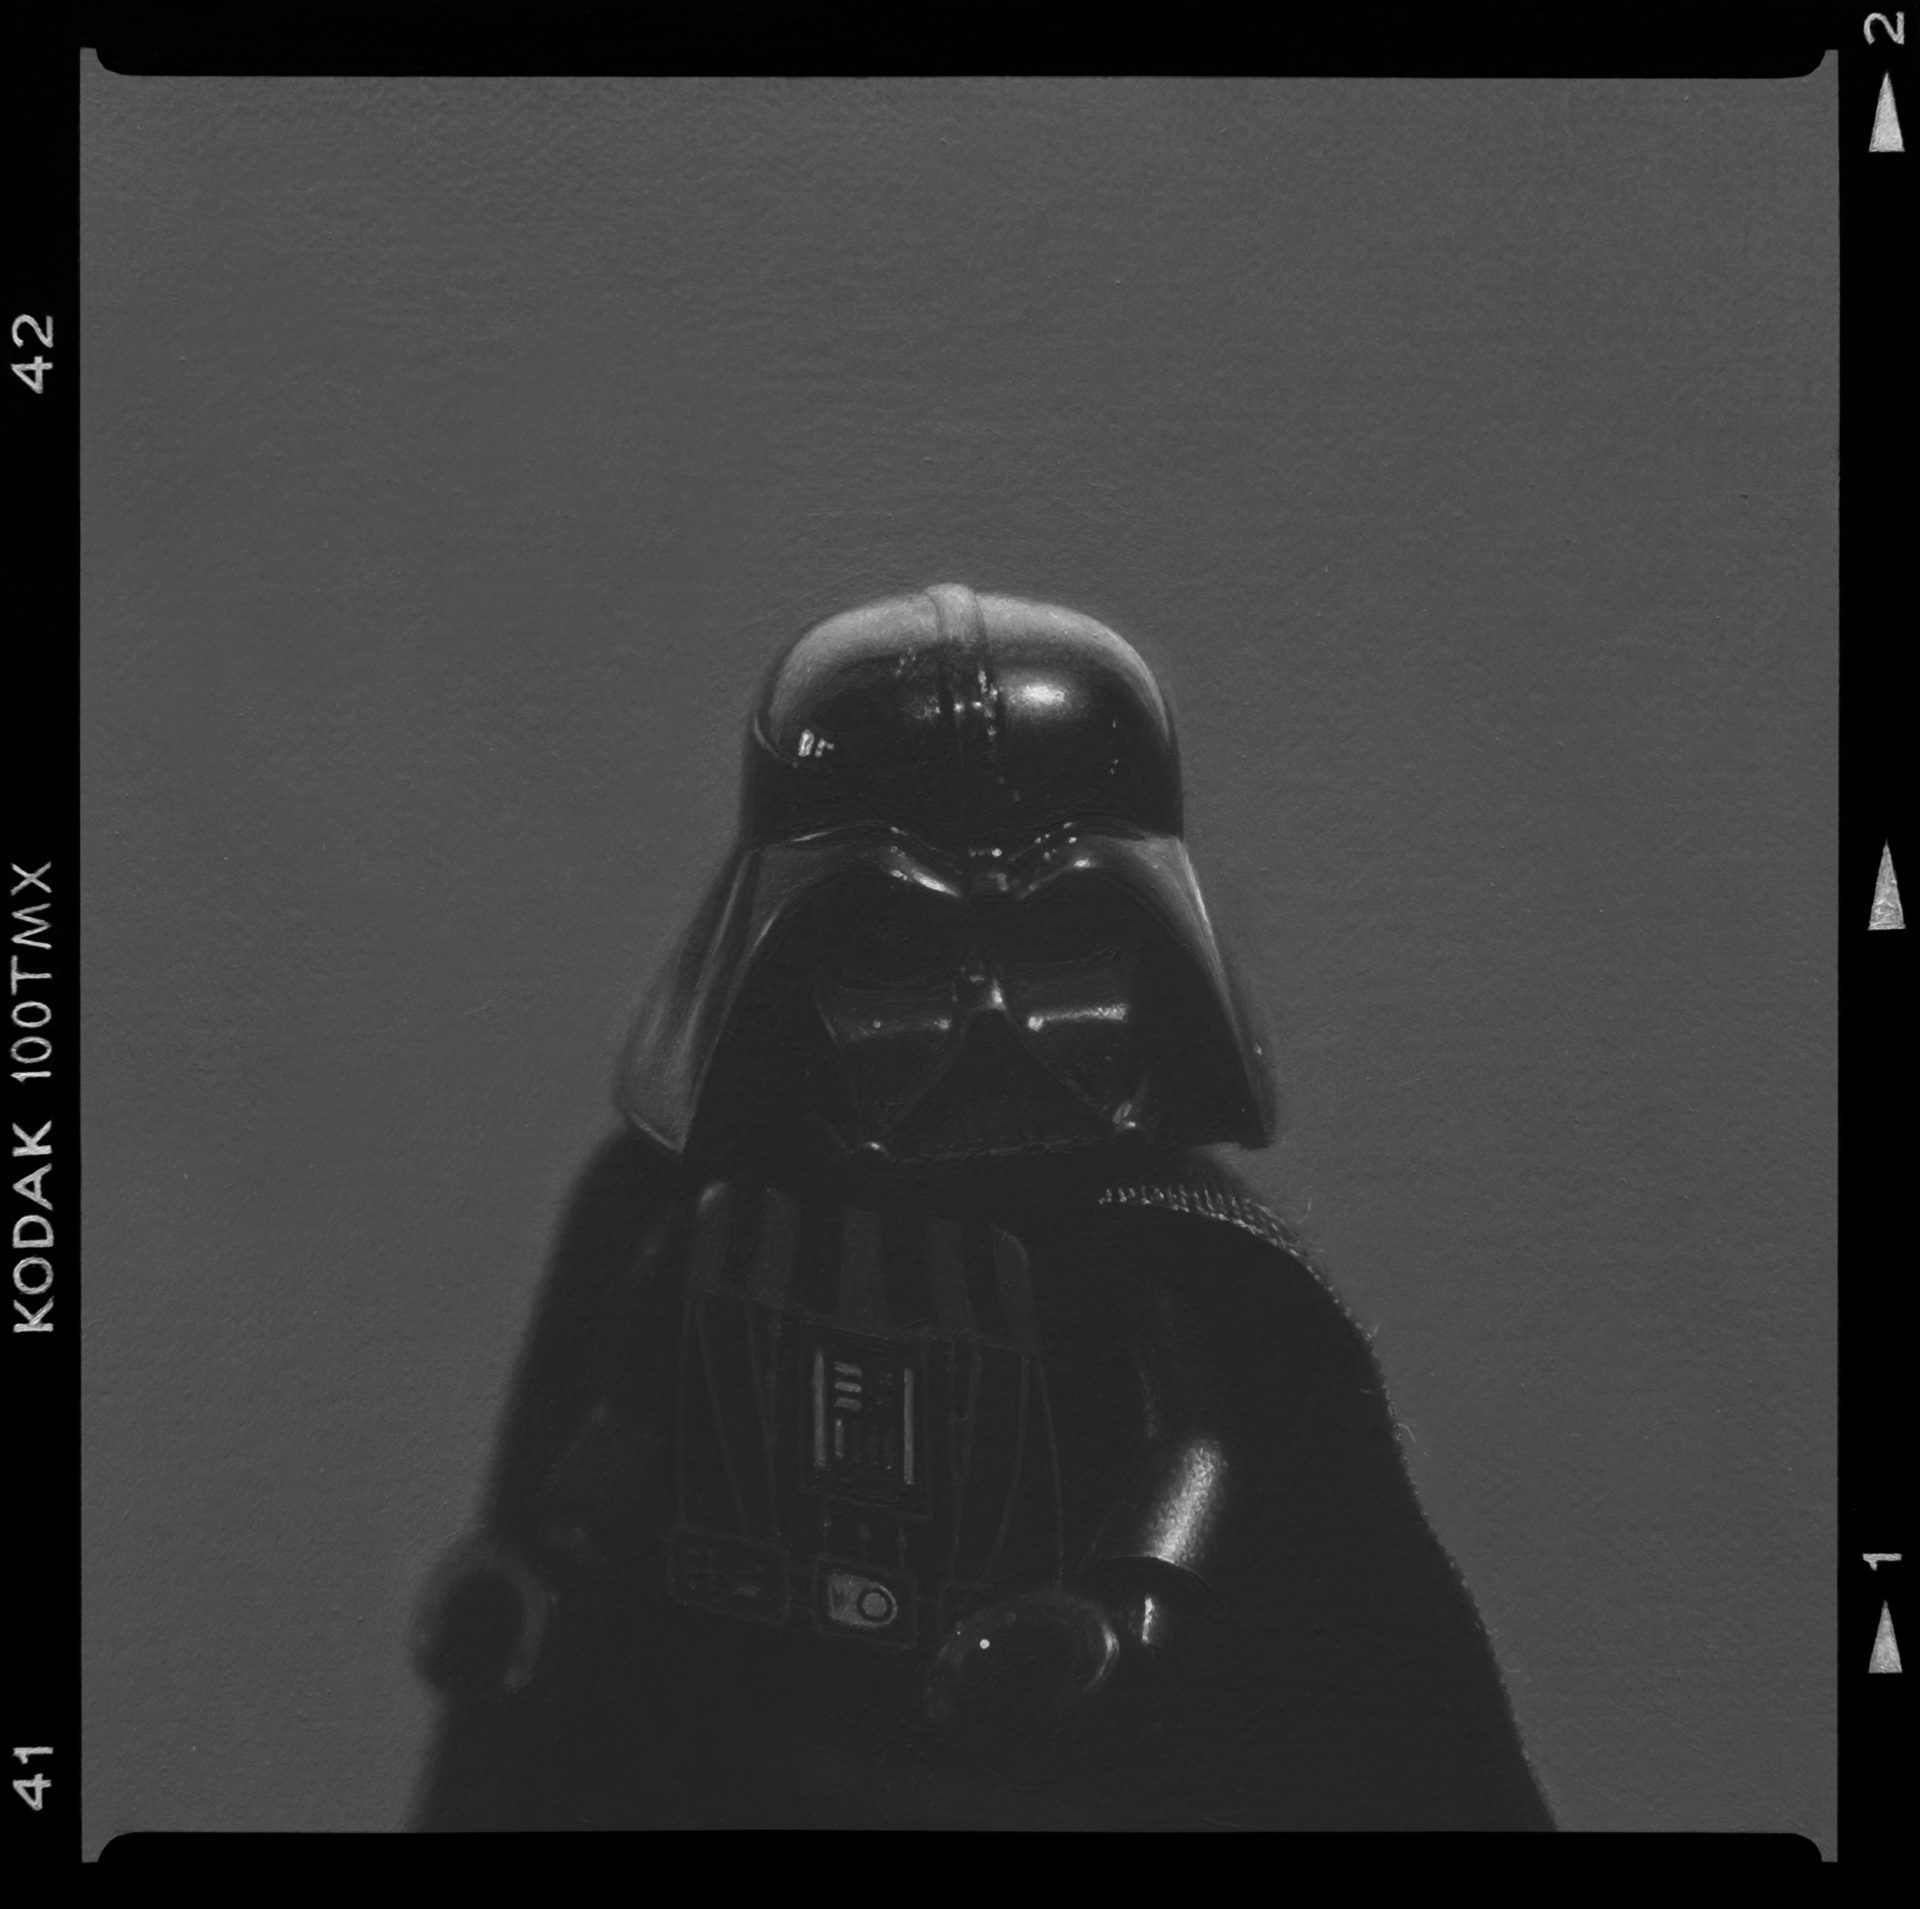 Lego Darth Vader, Kodak 100TMX, huile sur toile, 10 x 10 cm, 2017